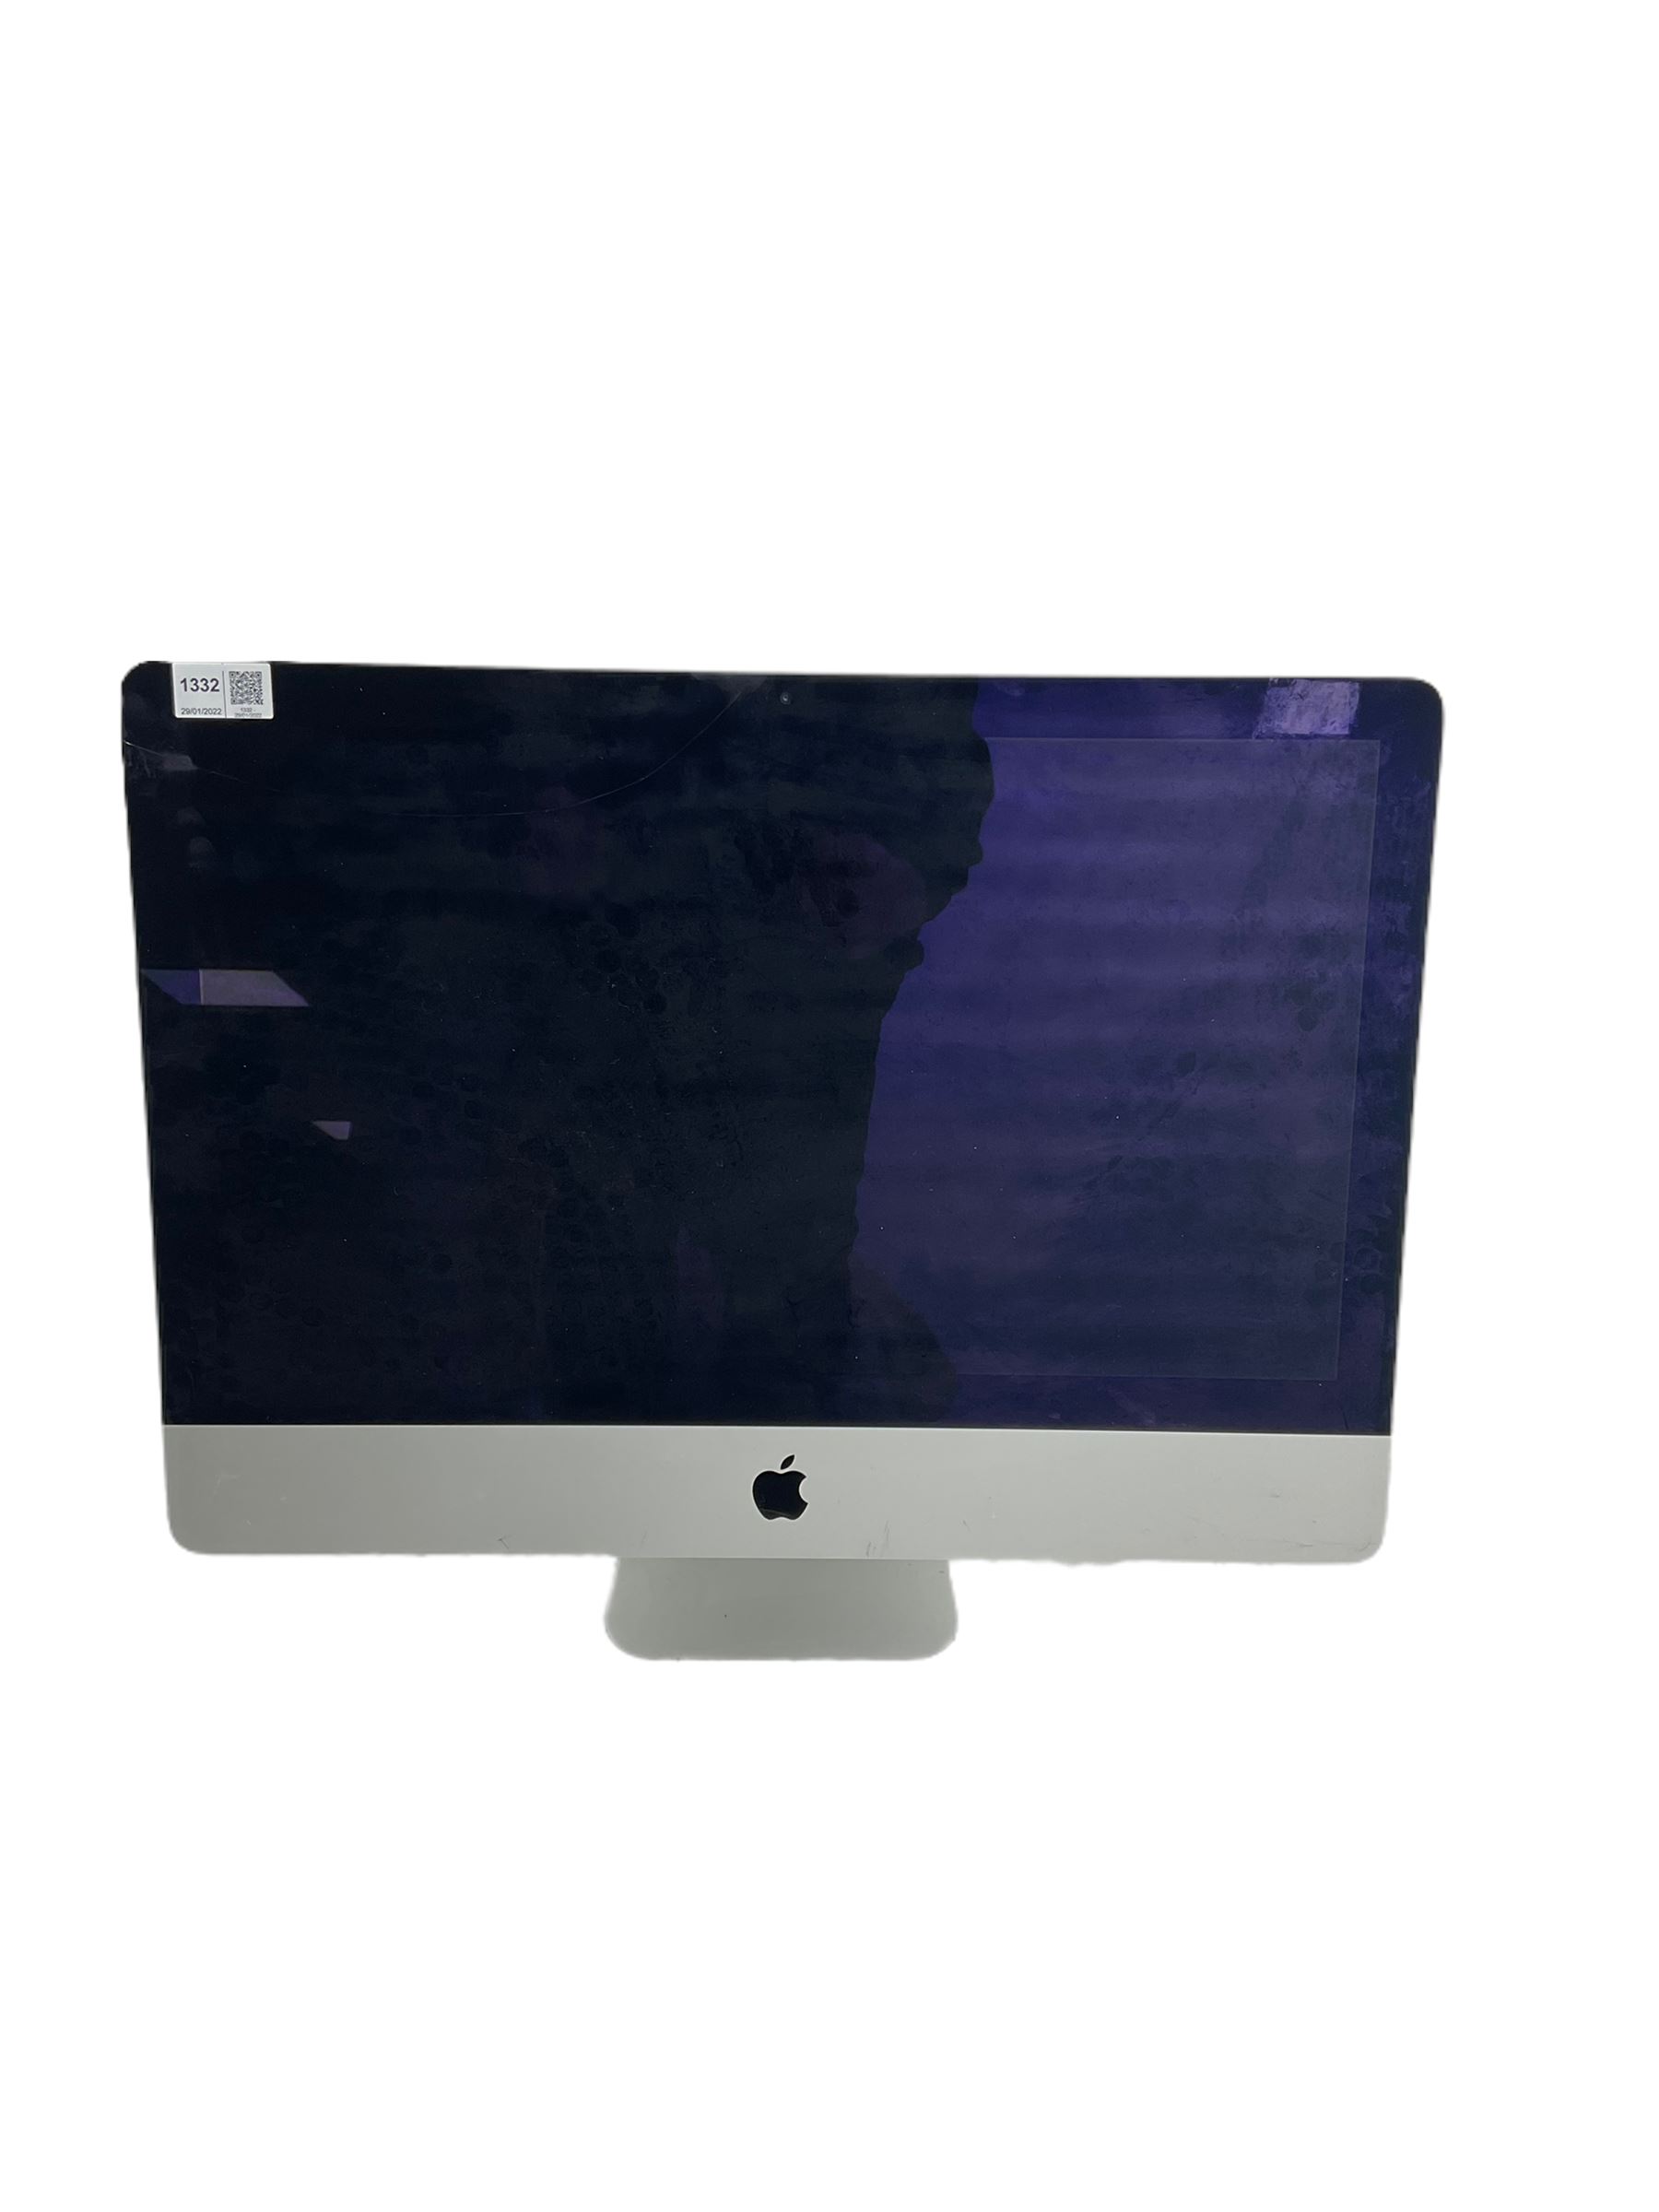 Apple iMac - Image 2 of 3